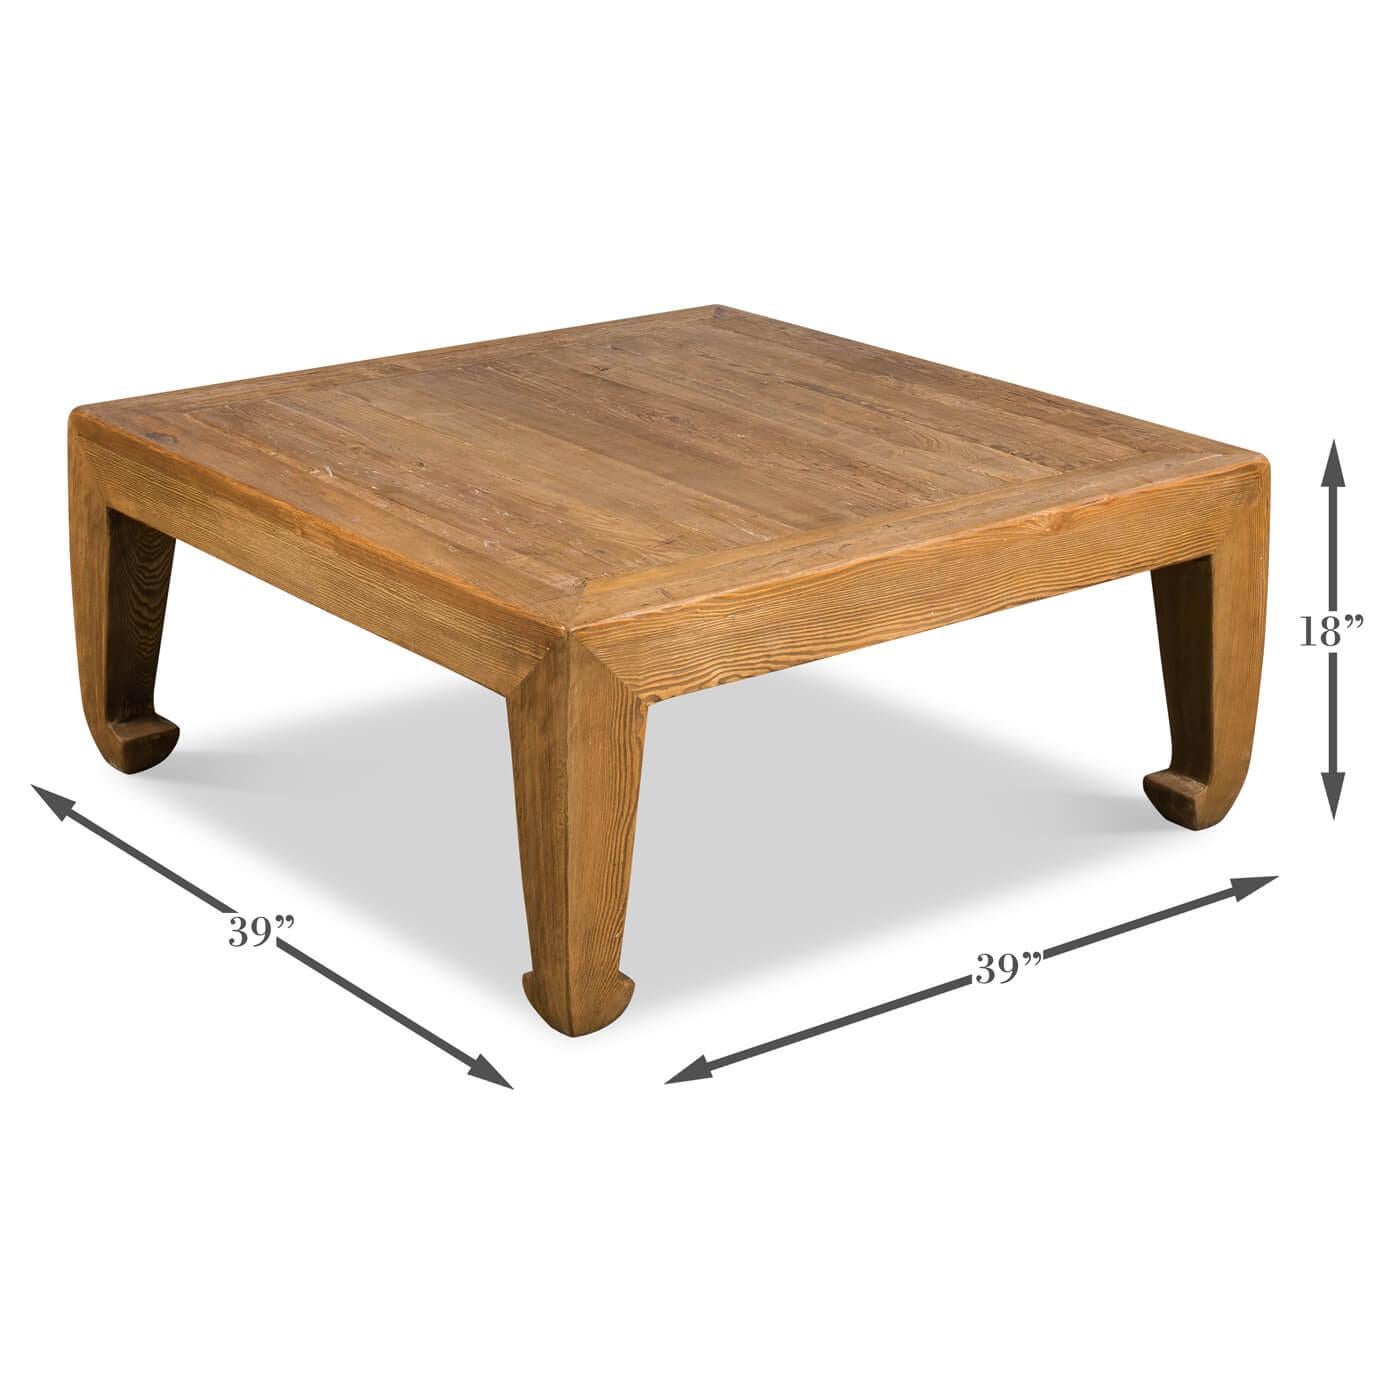 square coffee table dimensions